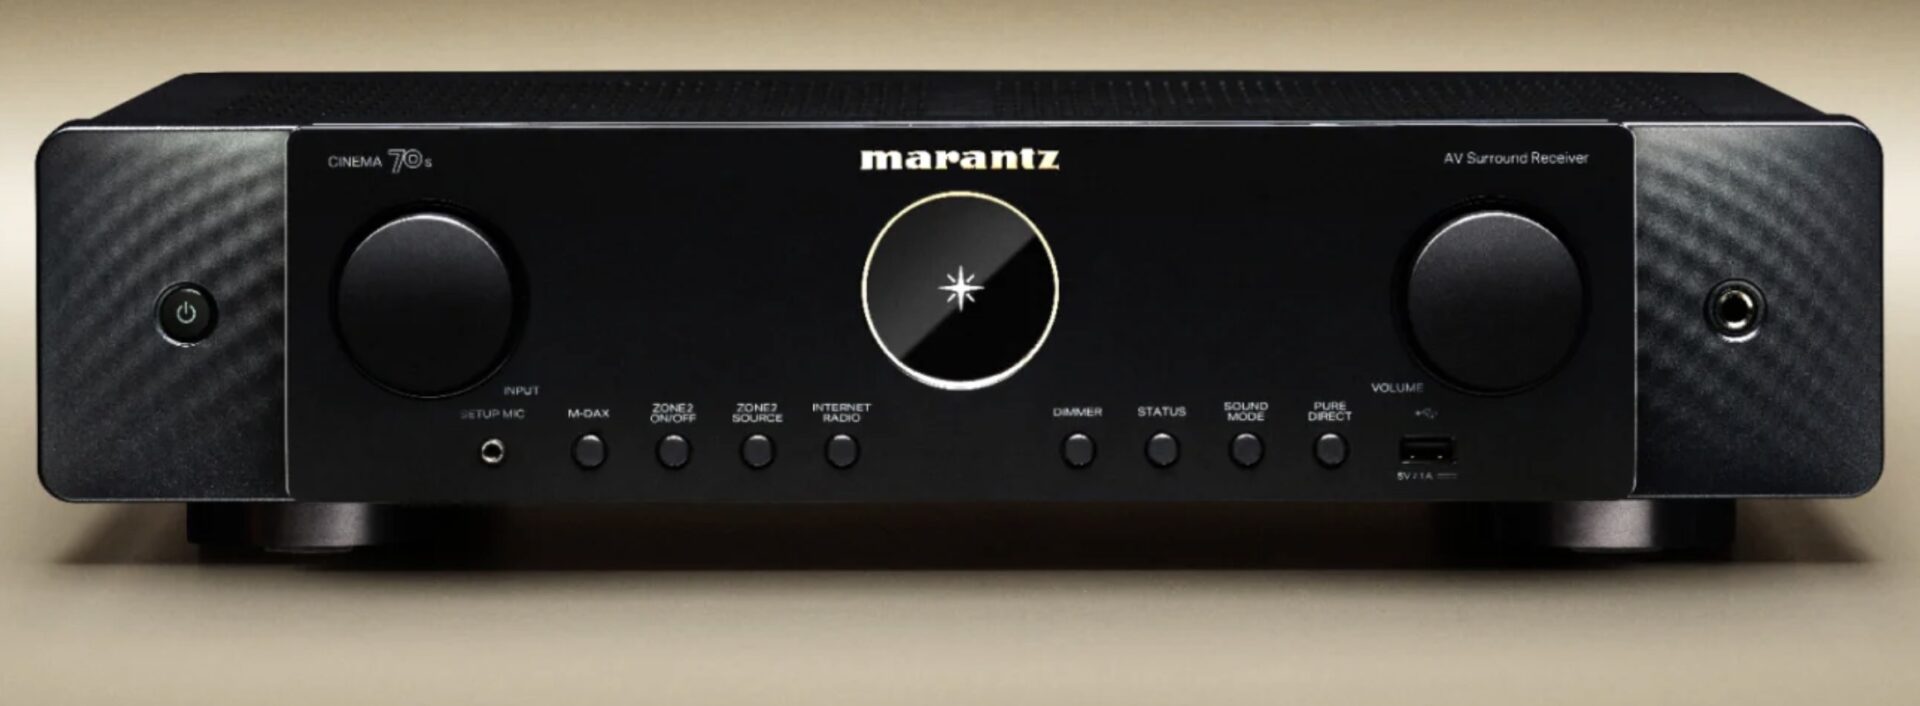 Marantz CINEMA 70s 7.2 ch. - Value Electronics